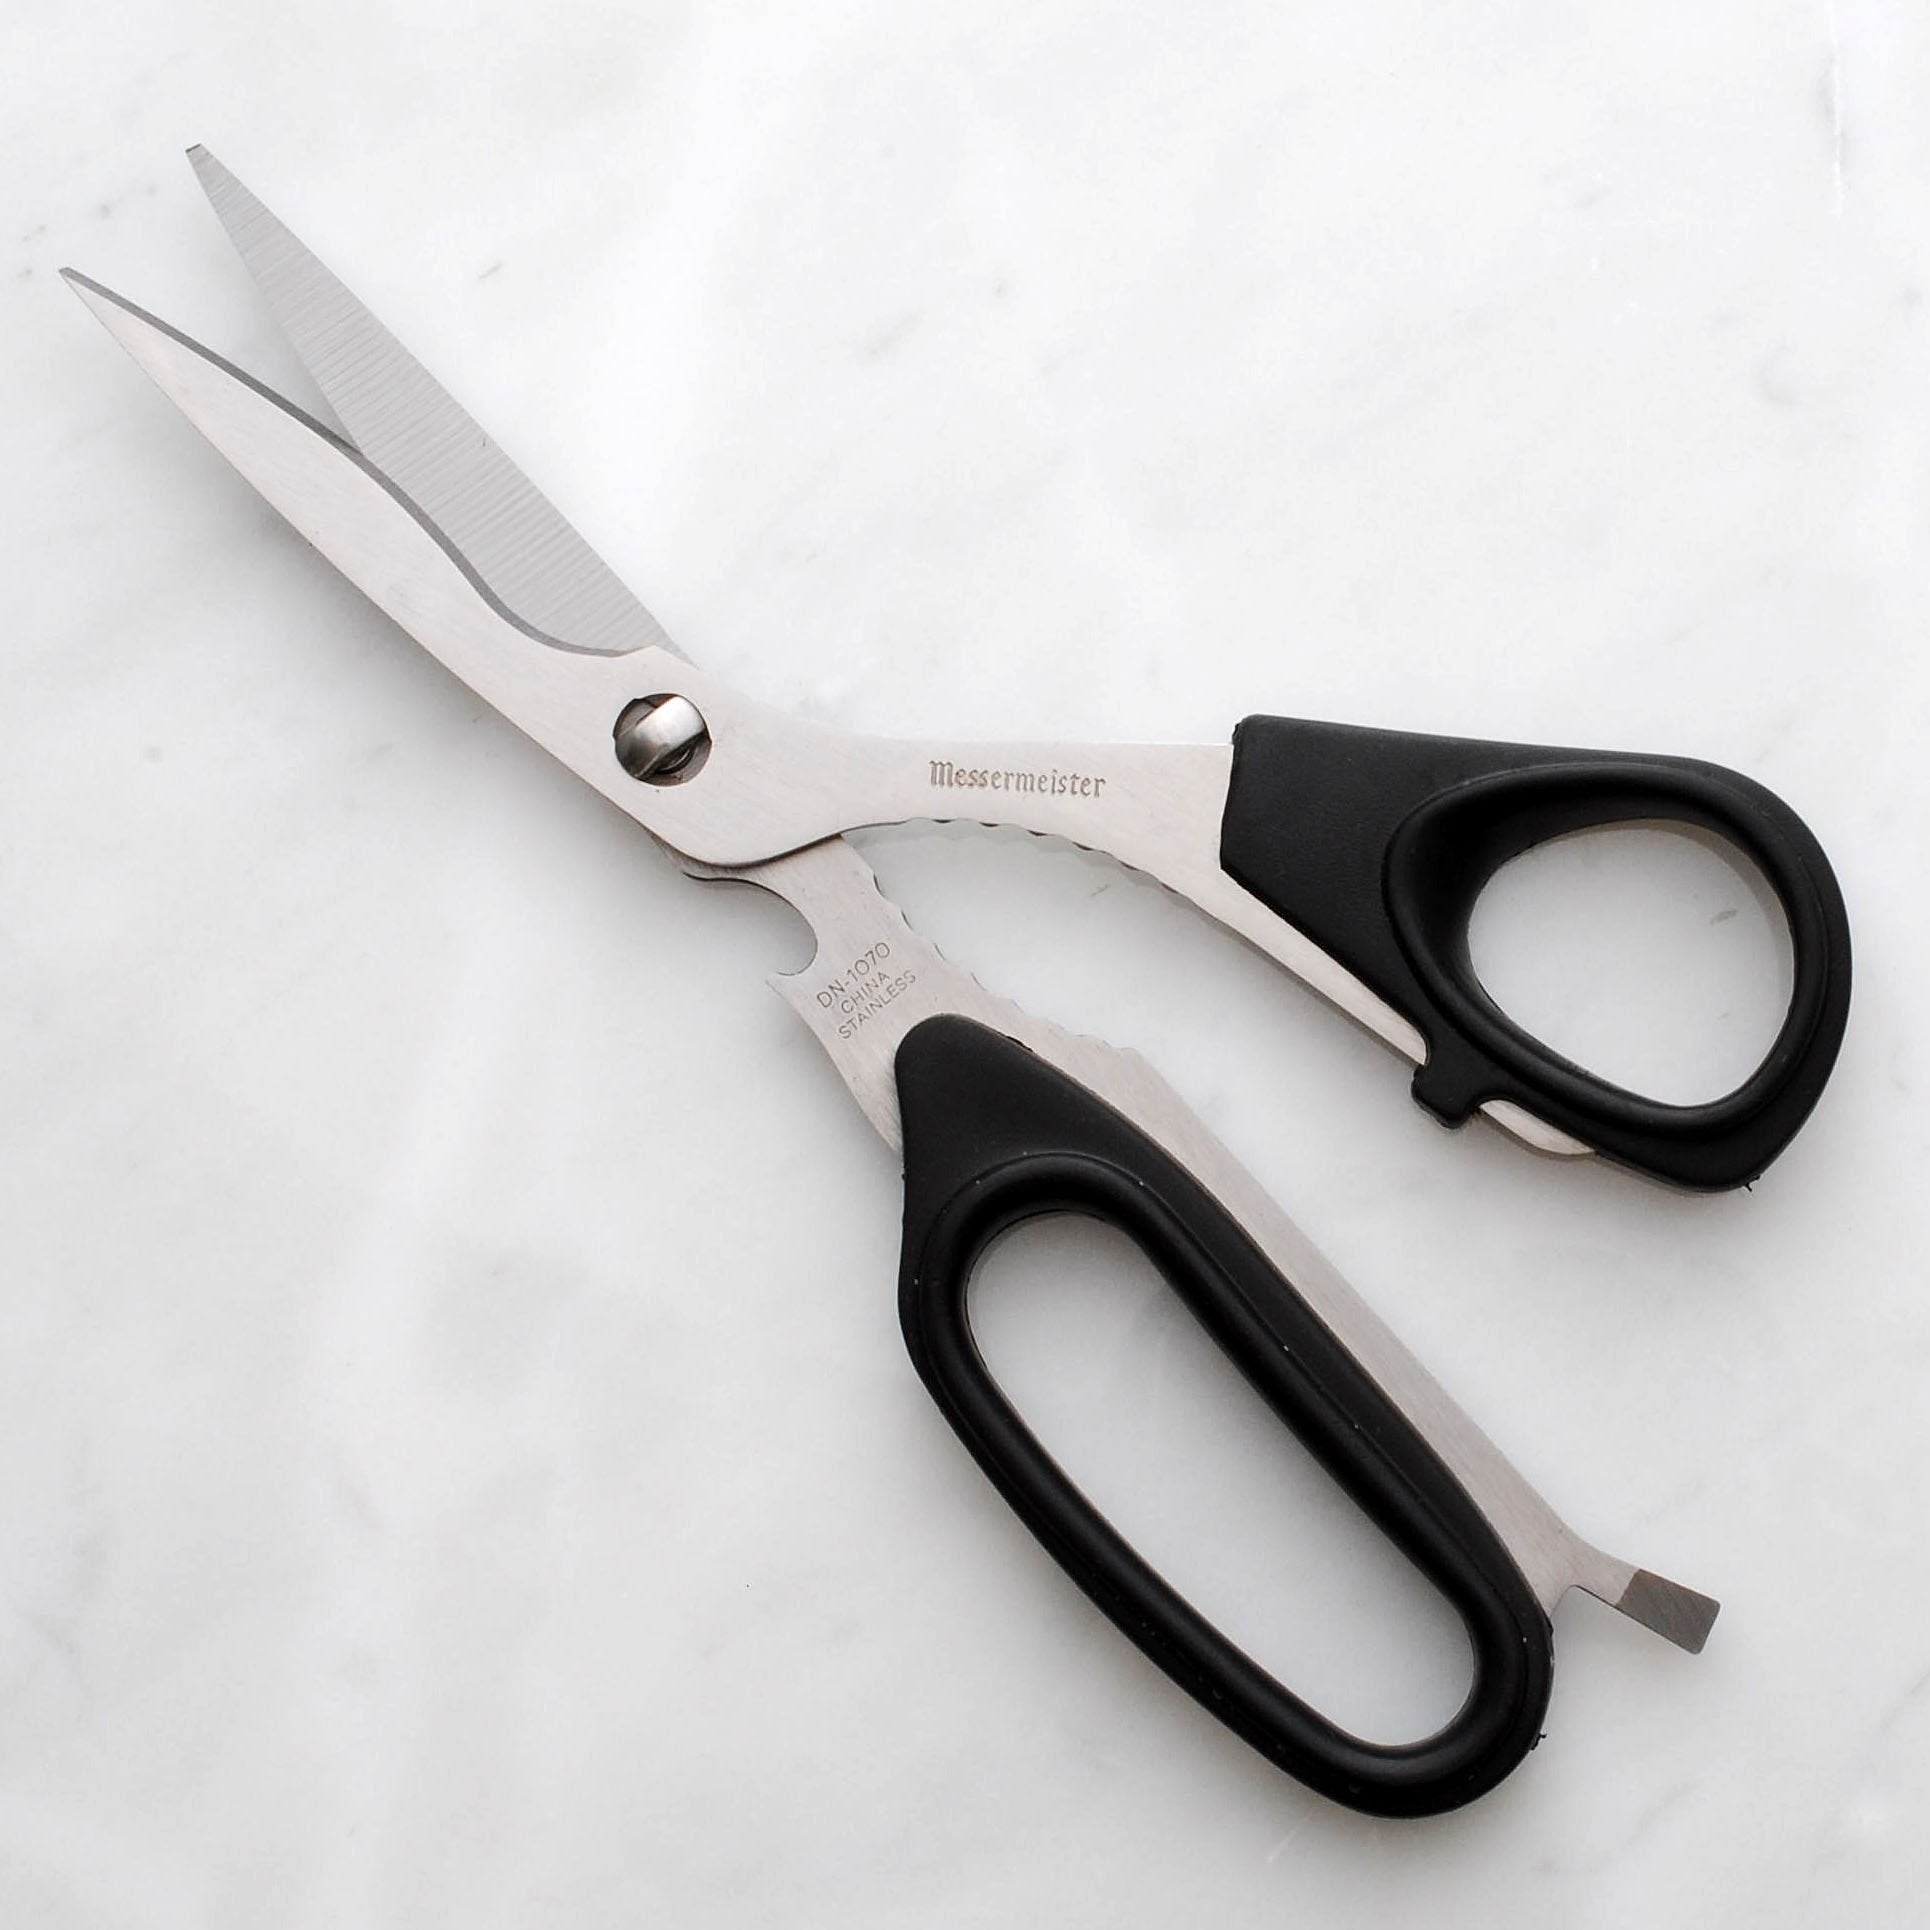 Messermeister 8.5" Take-Apart Shears, Scissors, take apart scissors